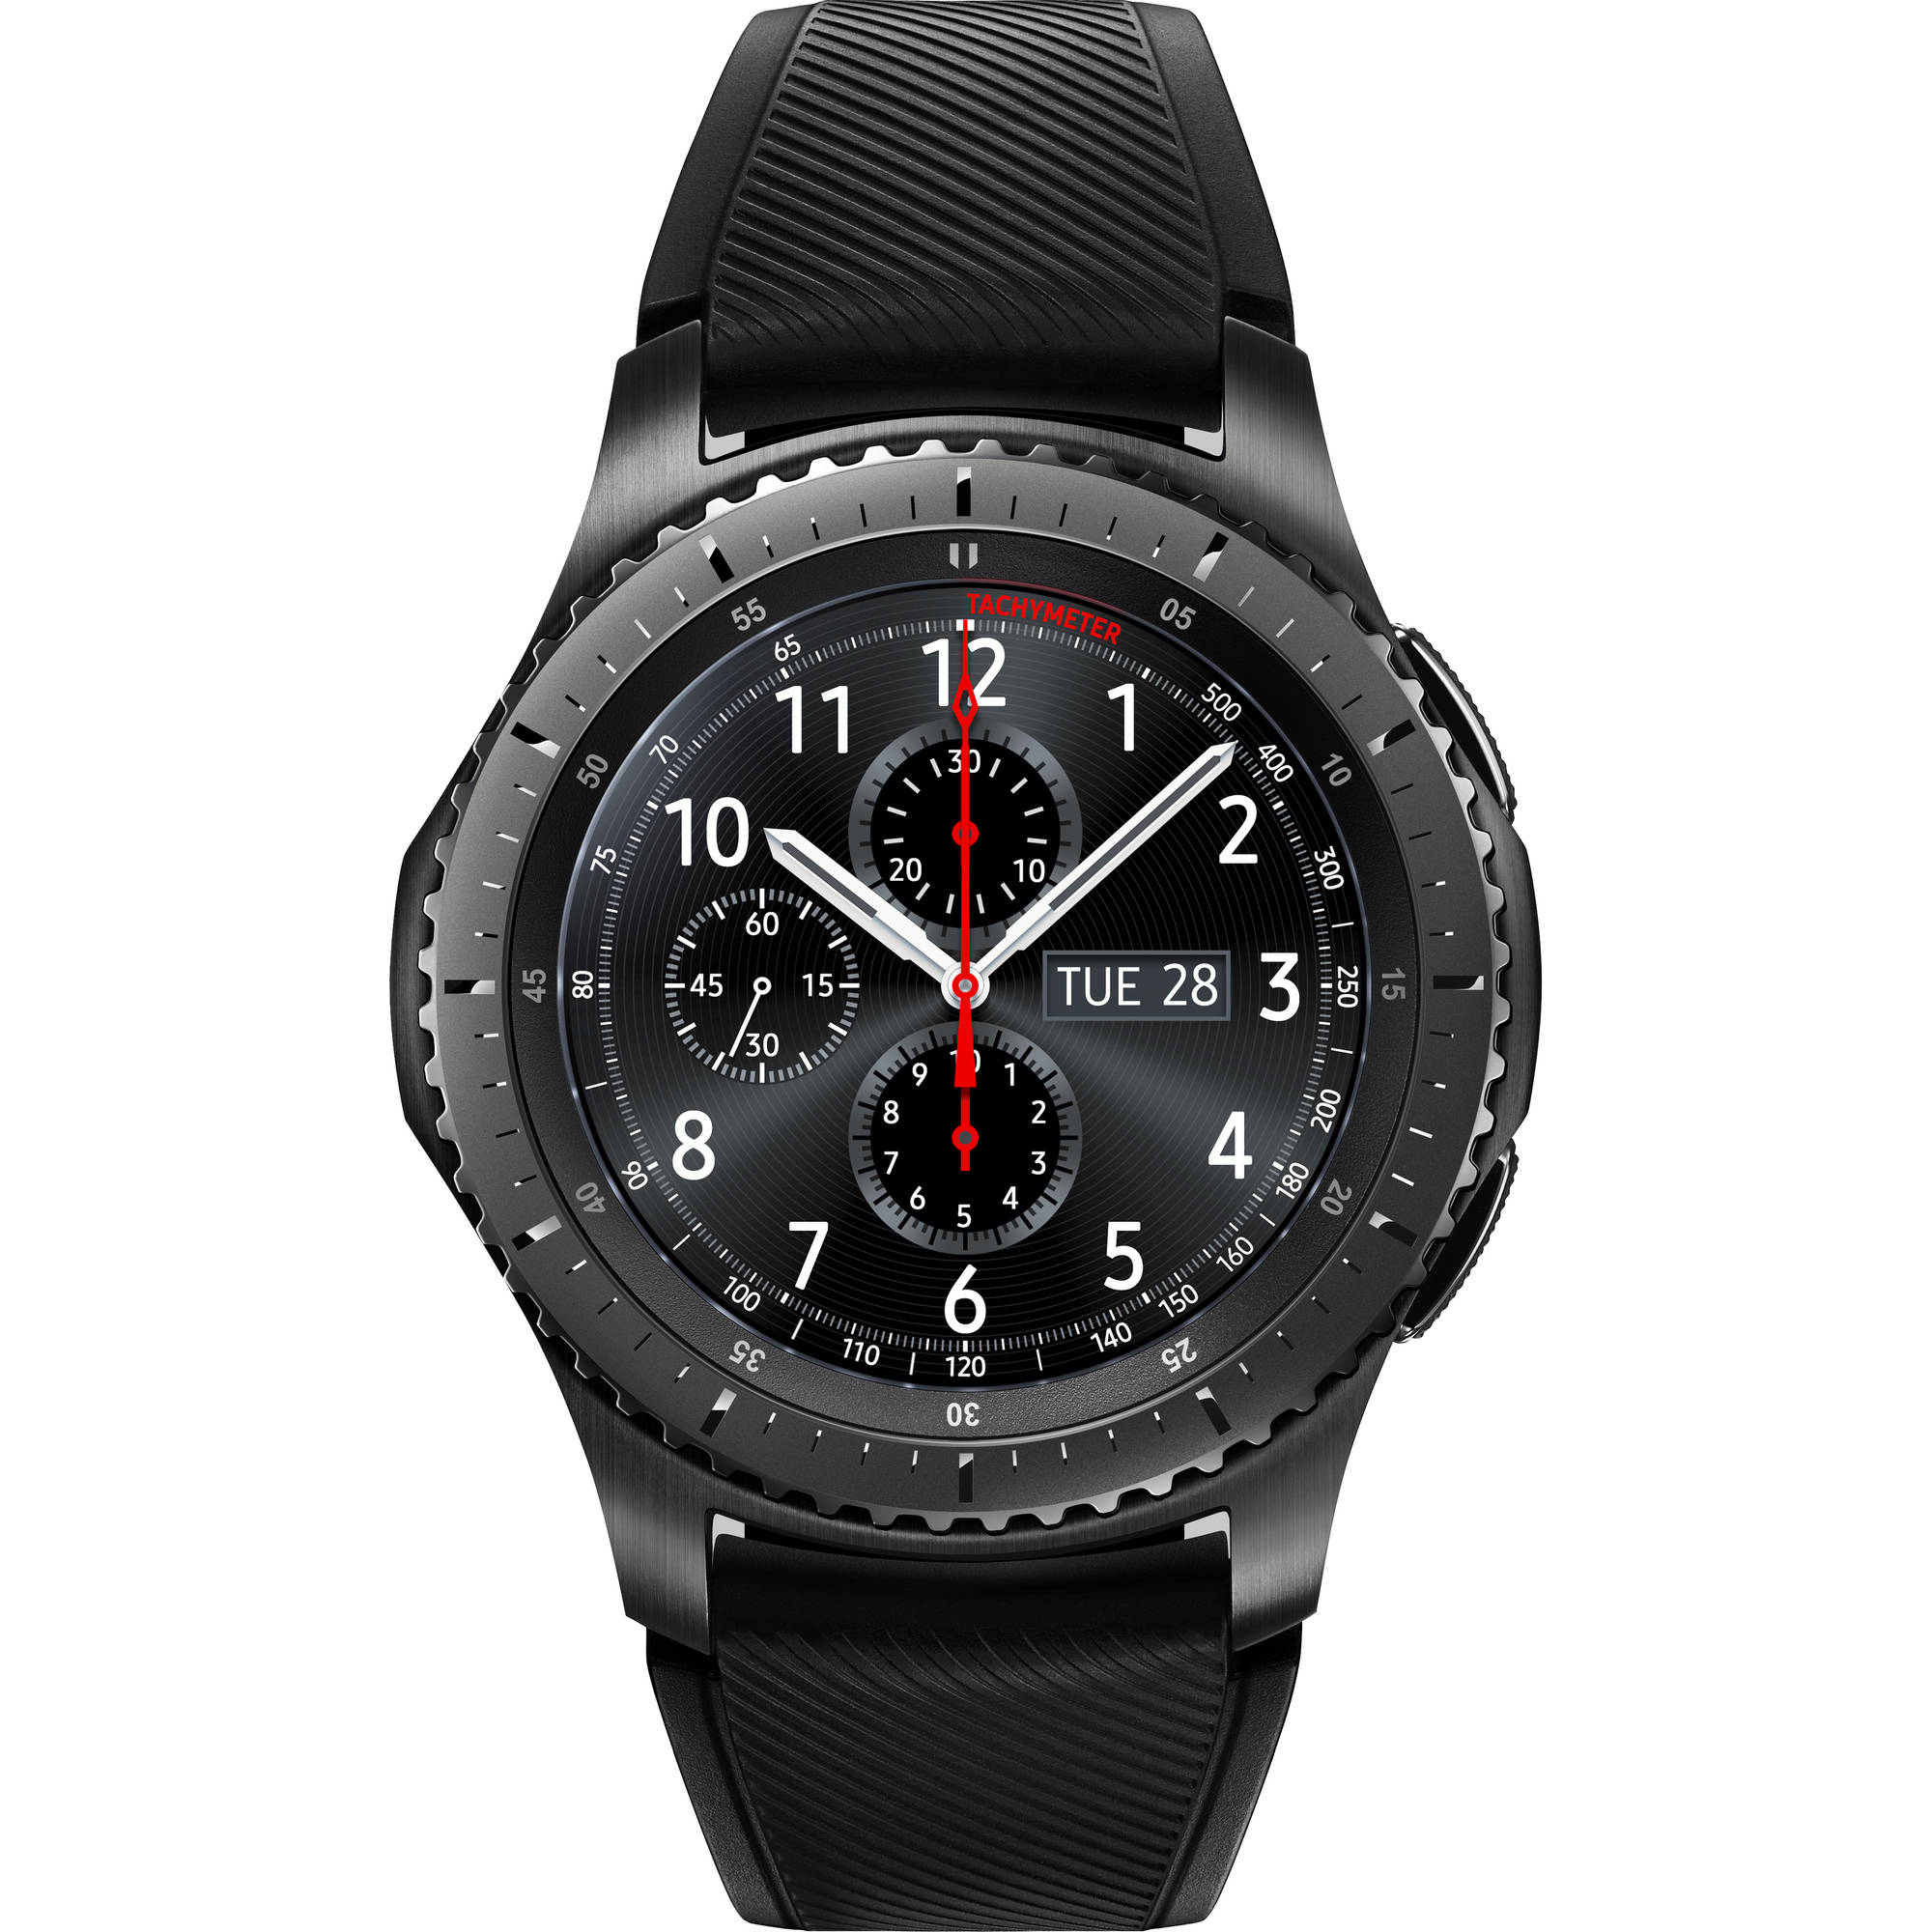 SAMSUNG Gear S3 Frontier Smart Watch Black 46mm - SM-R760NDAAXAR - image 1 of 9